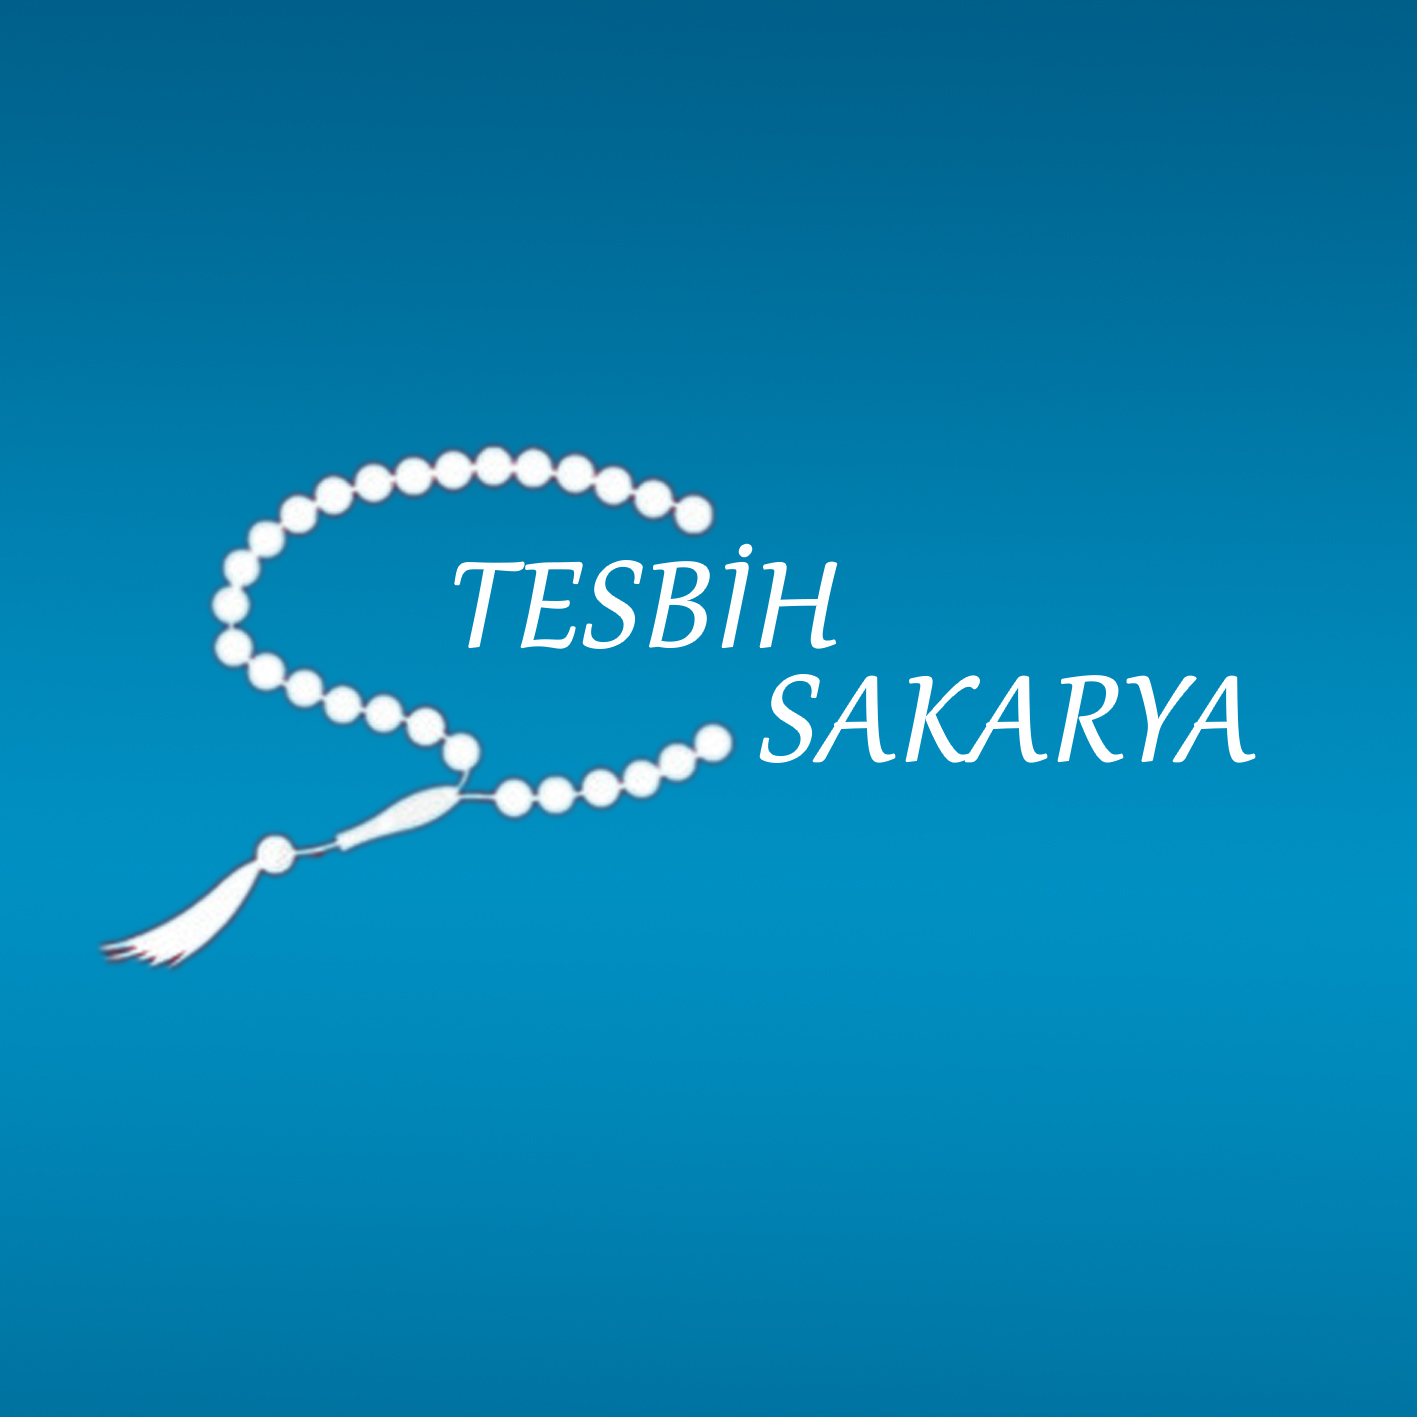 TesbihSakarya